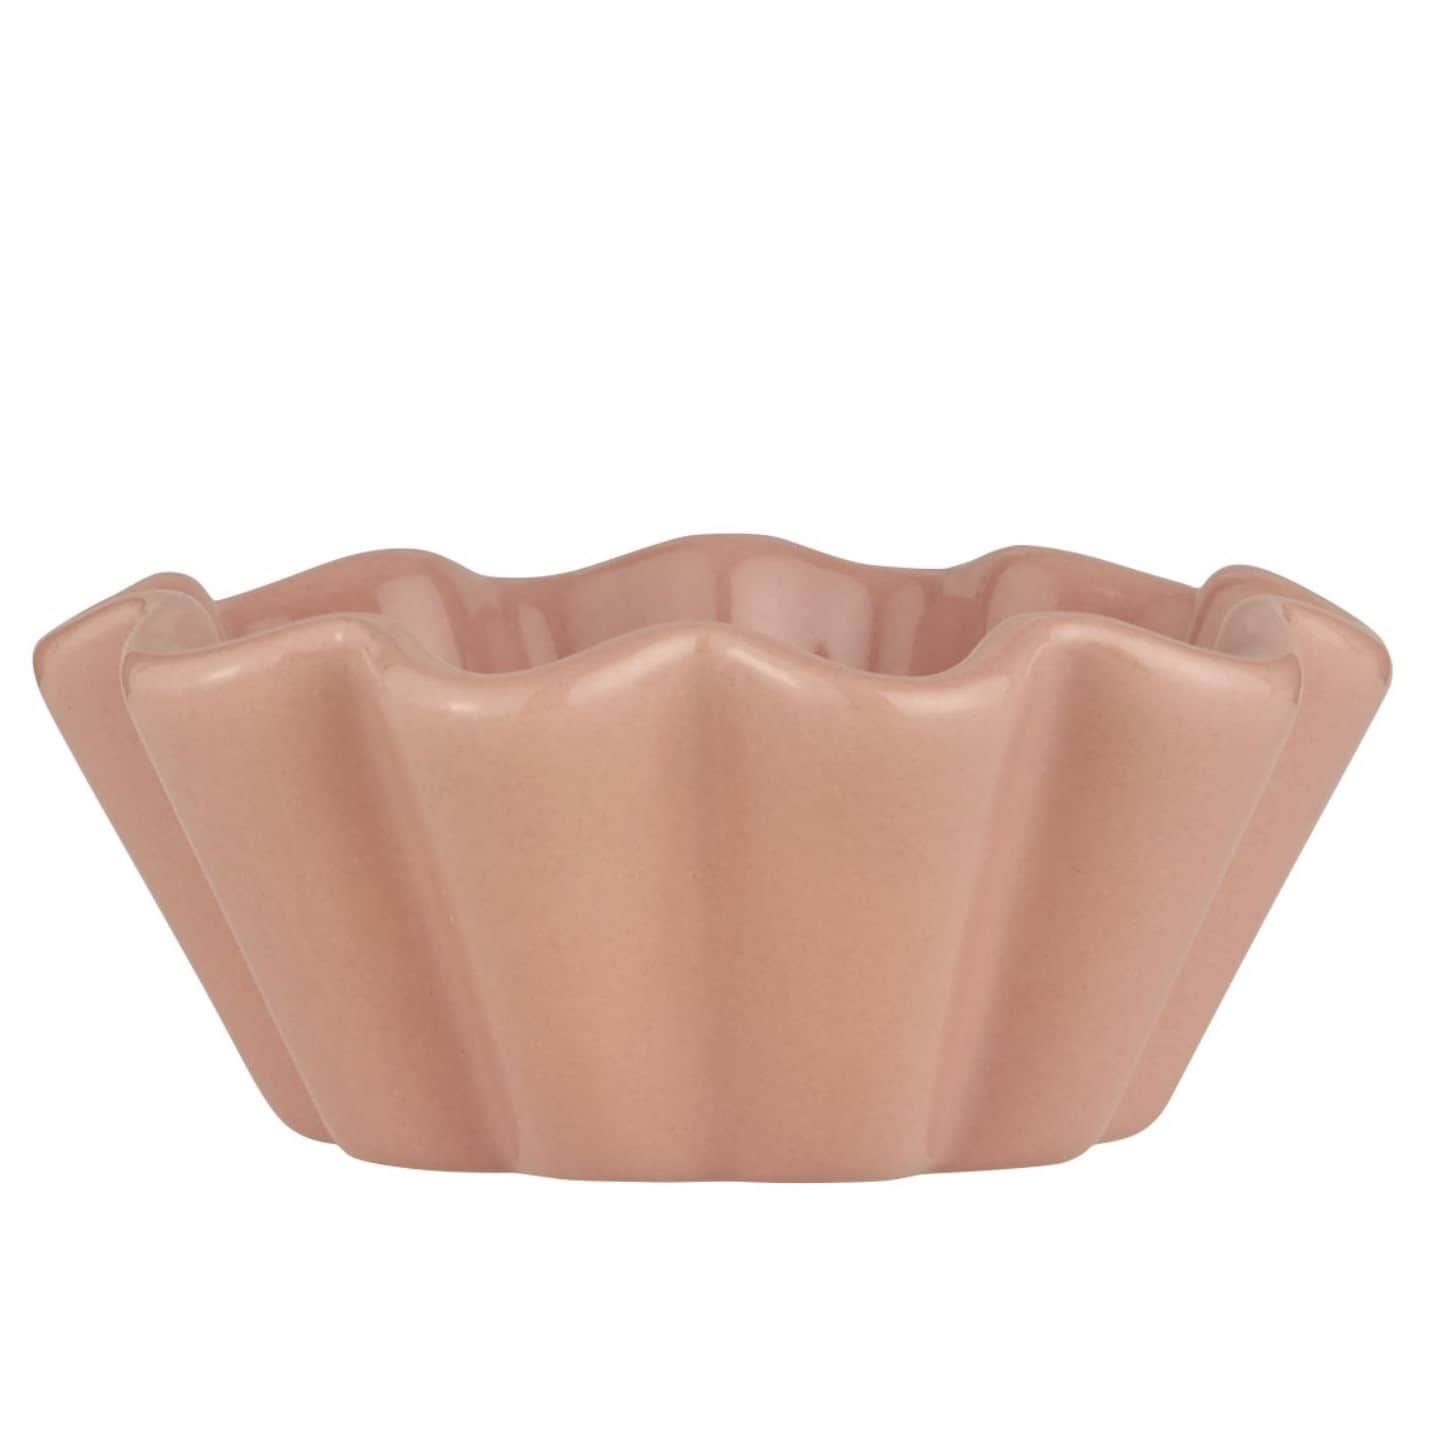 IB LAURSEN Keramická forma na muffiny Mynte Coral Almond, růžová barva, keramika